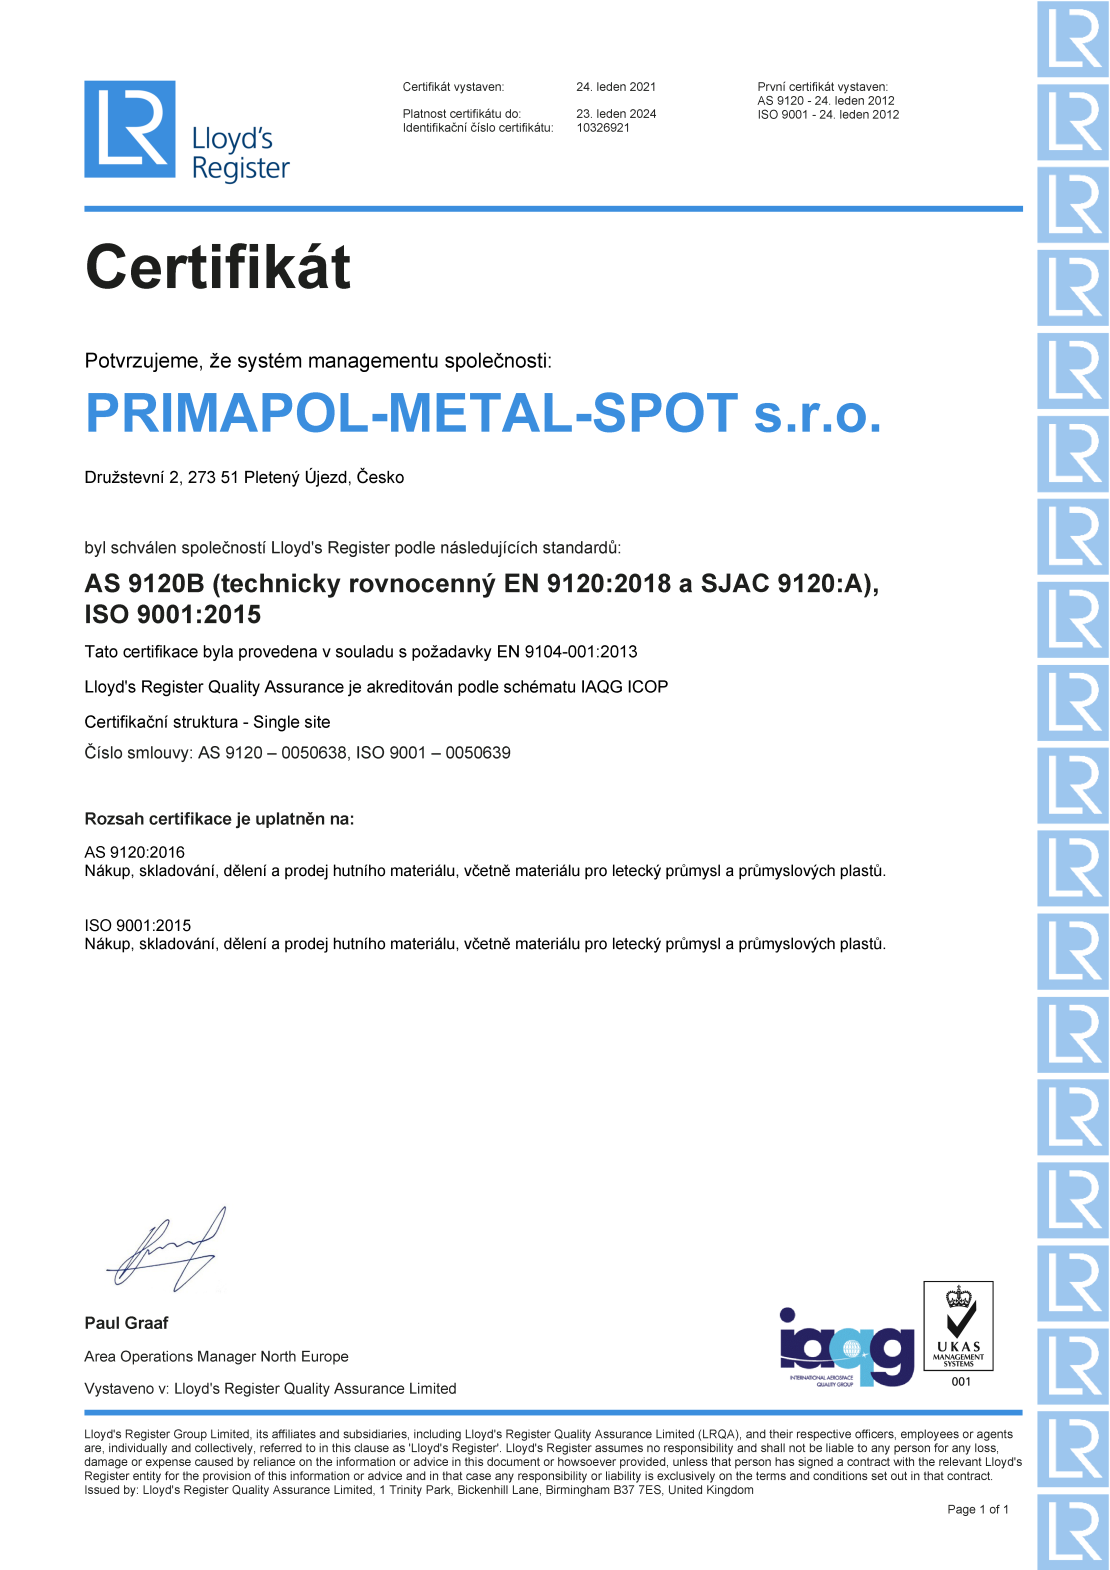 Certifikát AS 9120B (technicky rovnocenný EN 9120:2018 a SJAC 9120:A), ISO 9001:2015